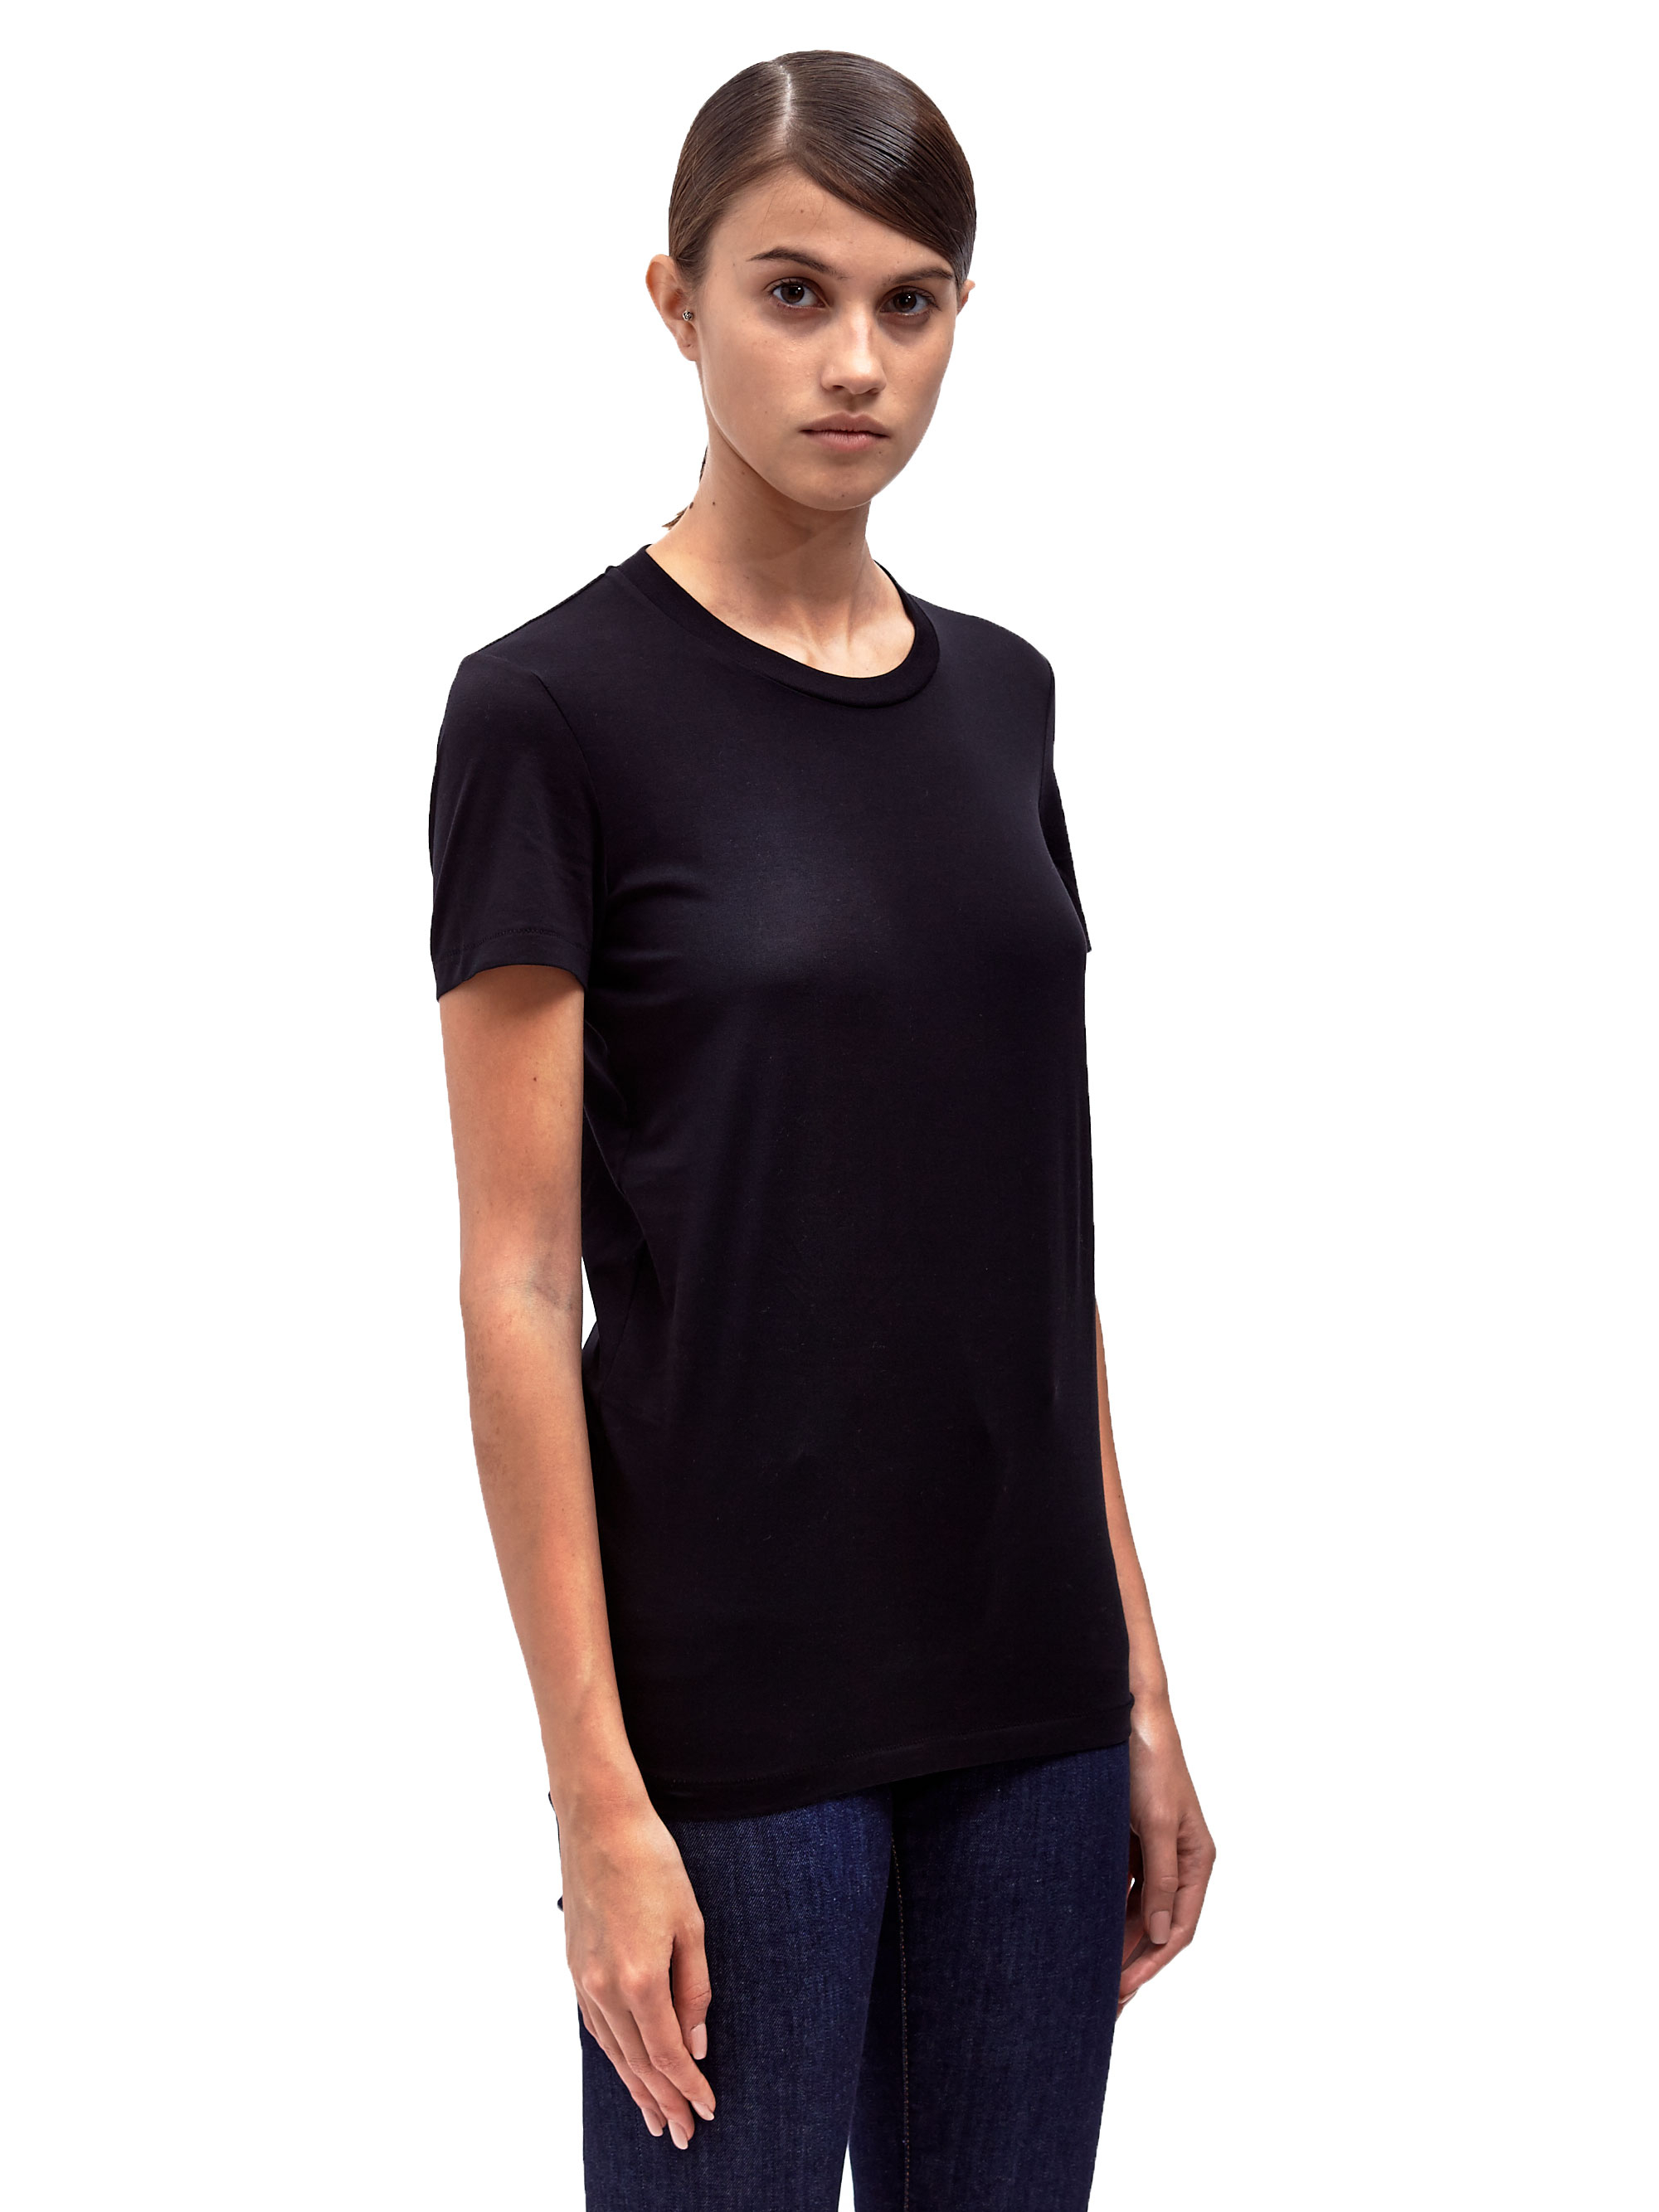 Lyst - Acne Studios Womens Bliss Classic Crew Neck T-Shirt in Black